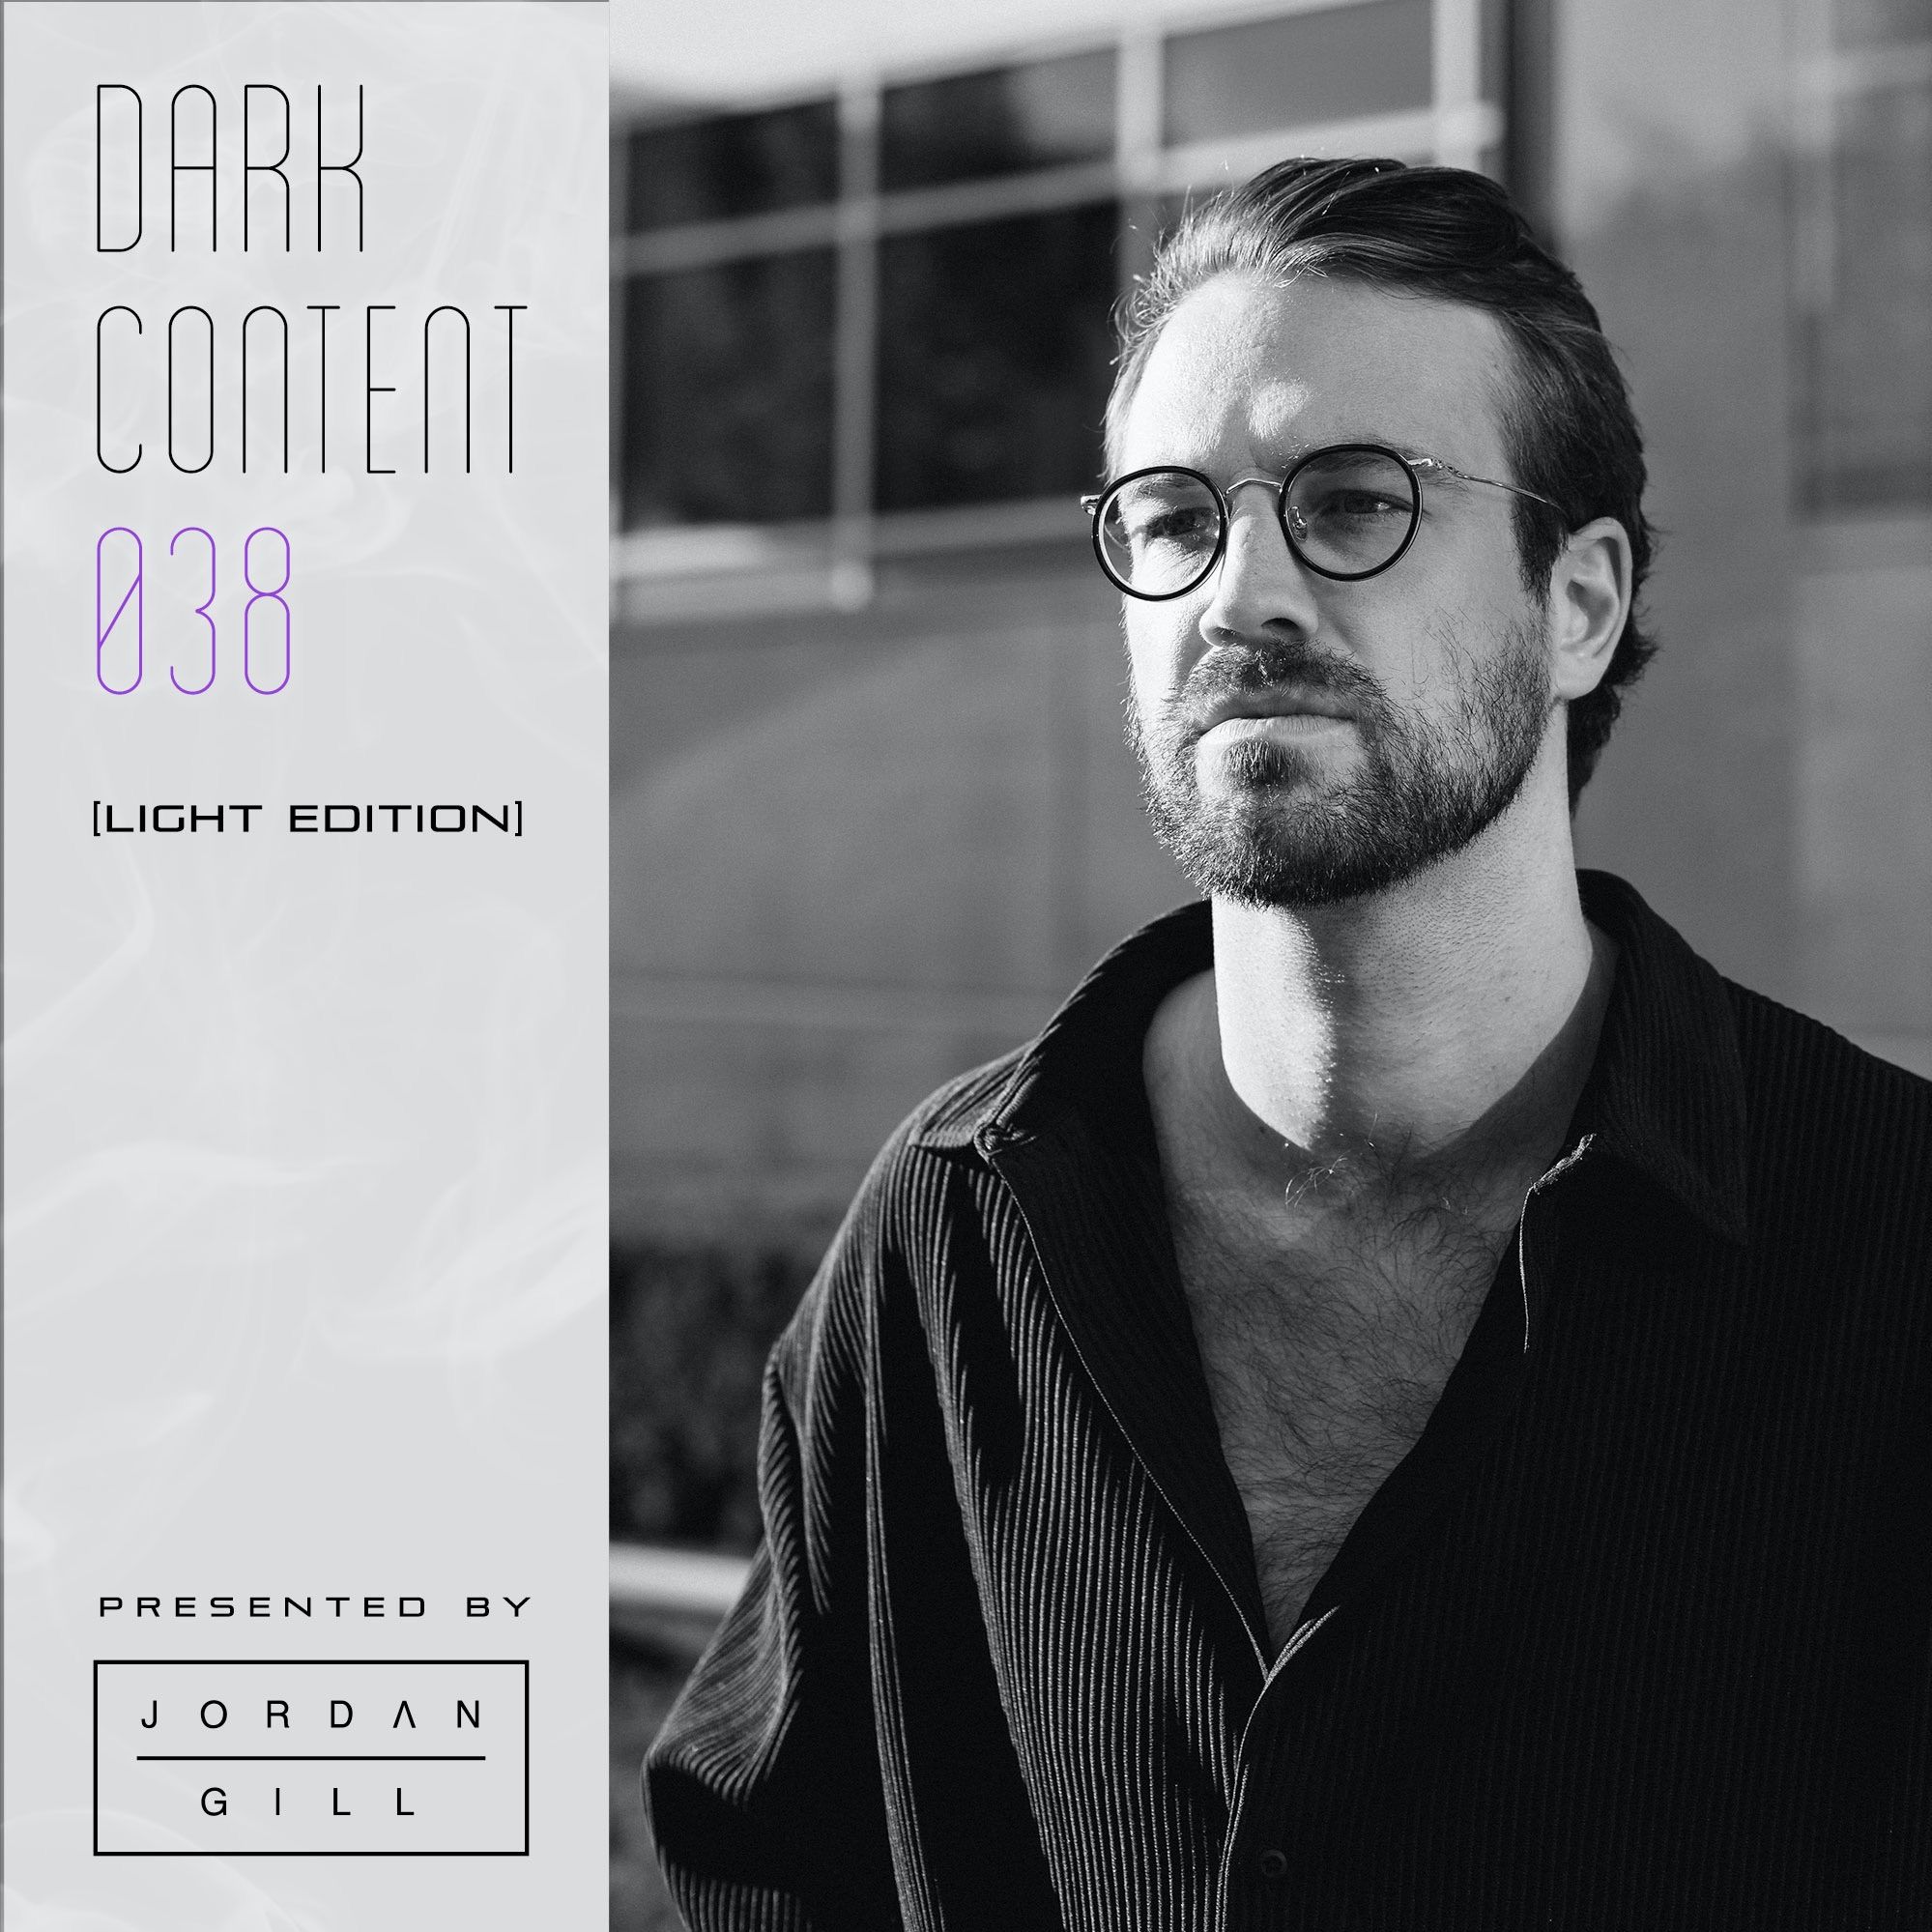 ¡Descargar Dark Content 038 [Light Edition]